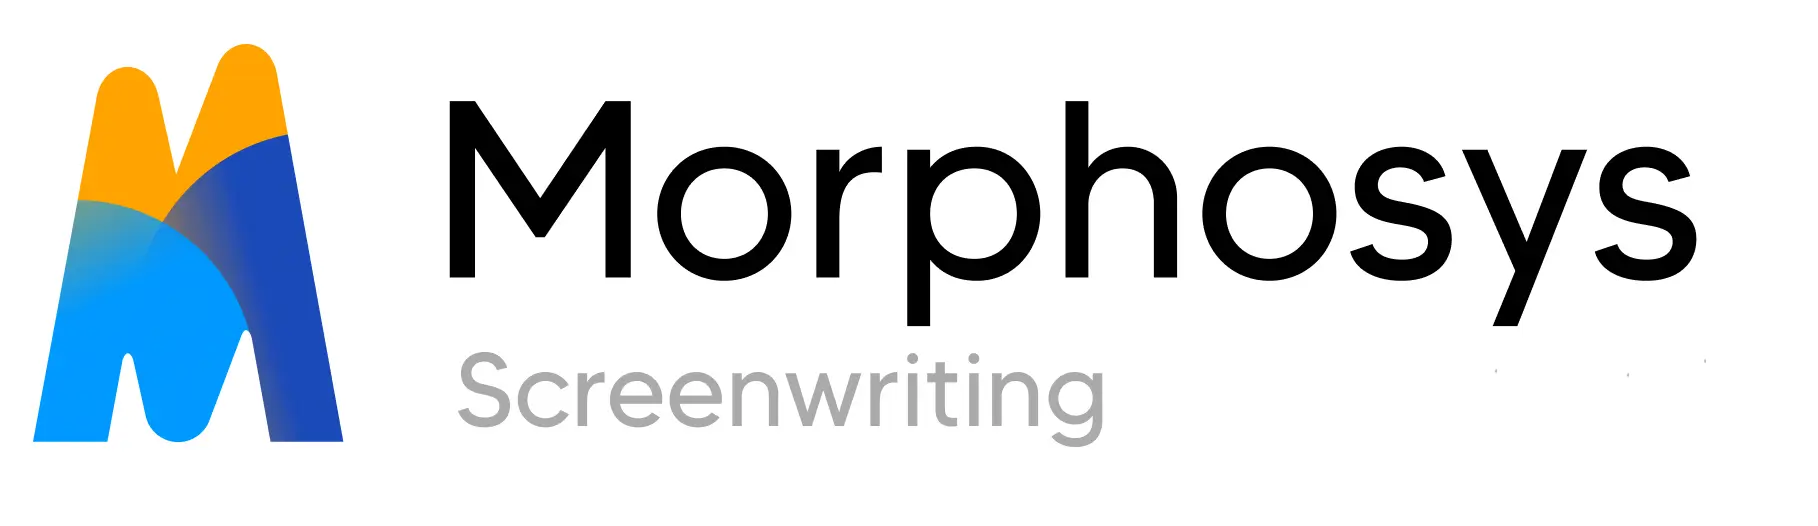 Morphosys Screenwriting